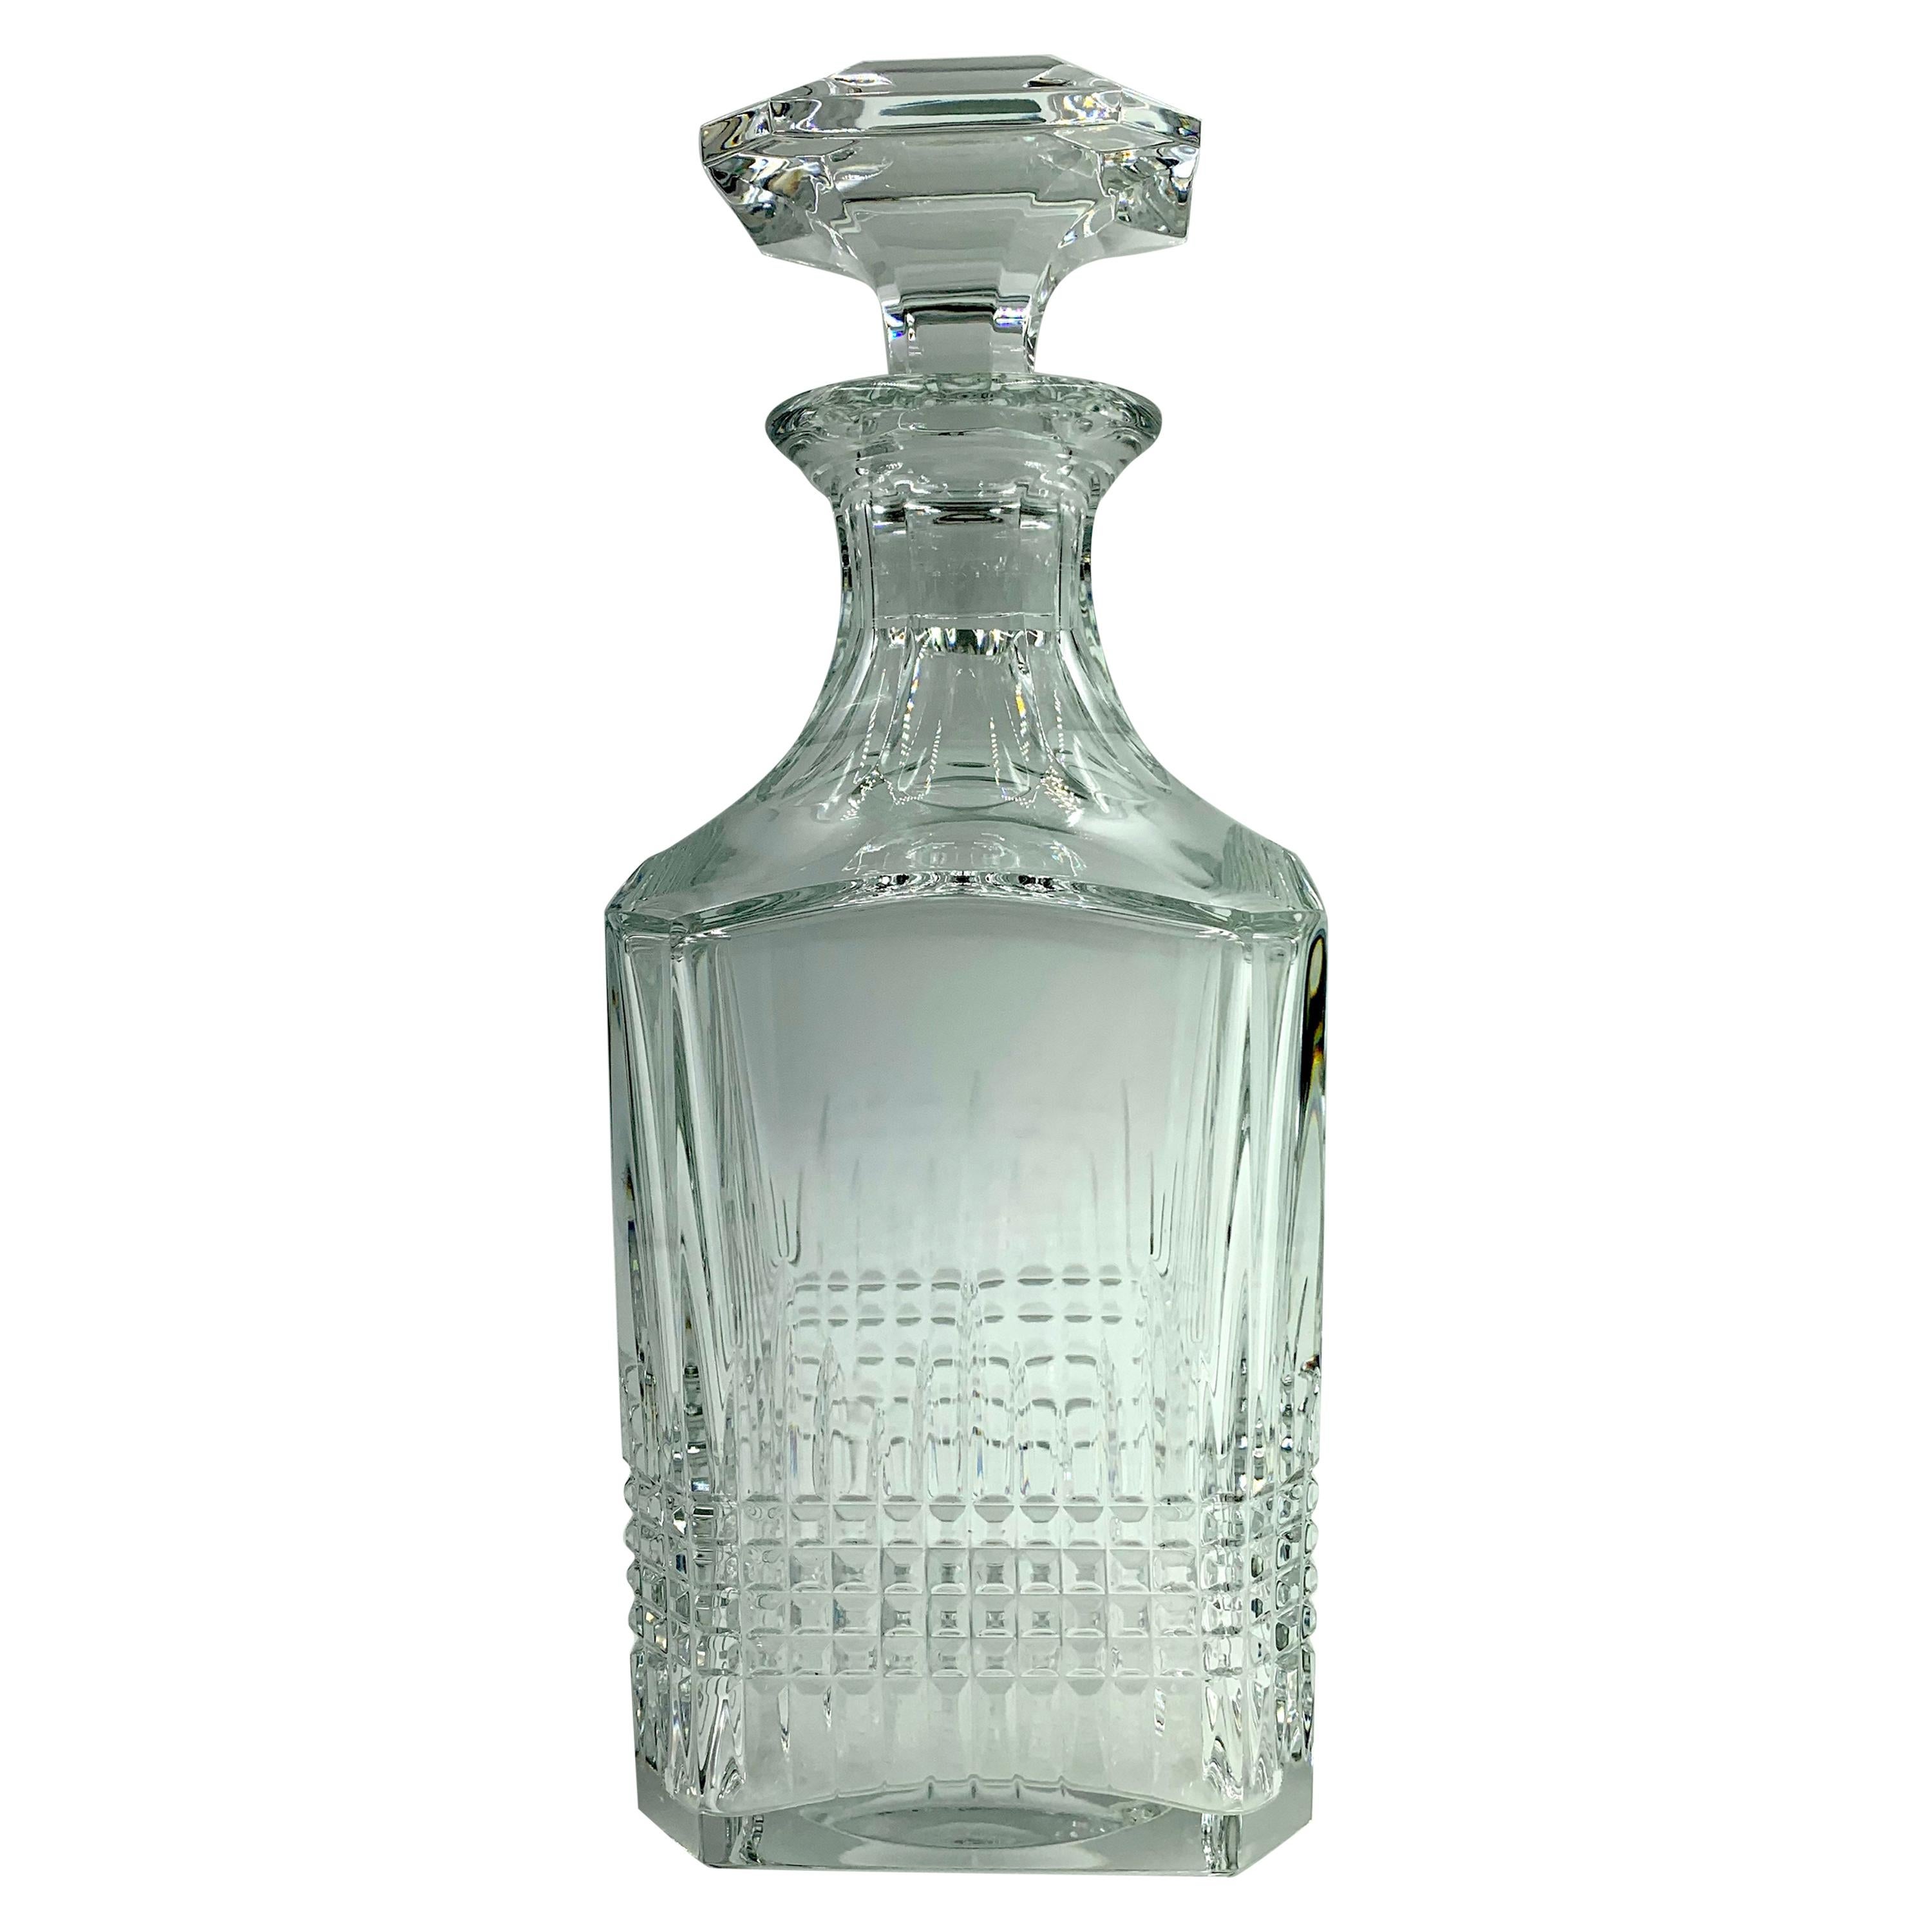 Vintage Baccarat Crystal Nancy Square Whiskey Decanter